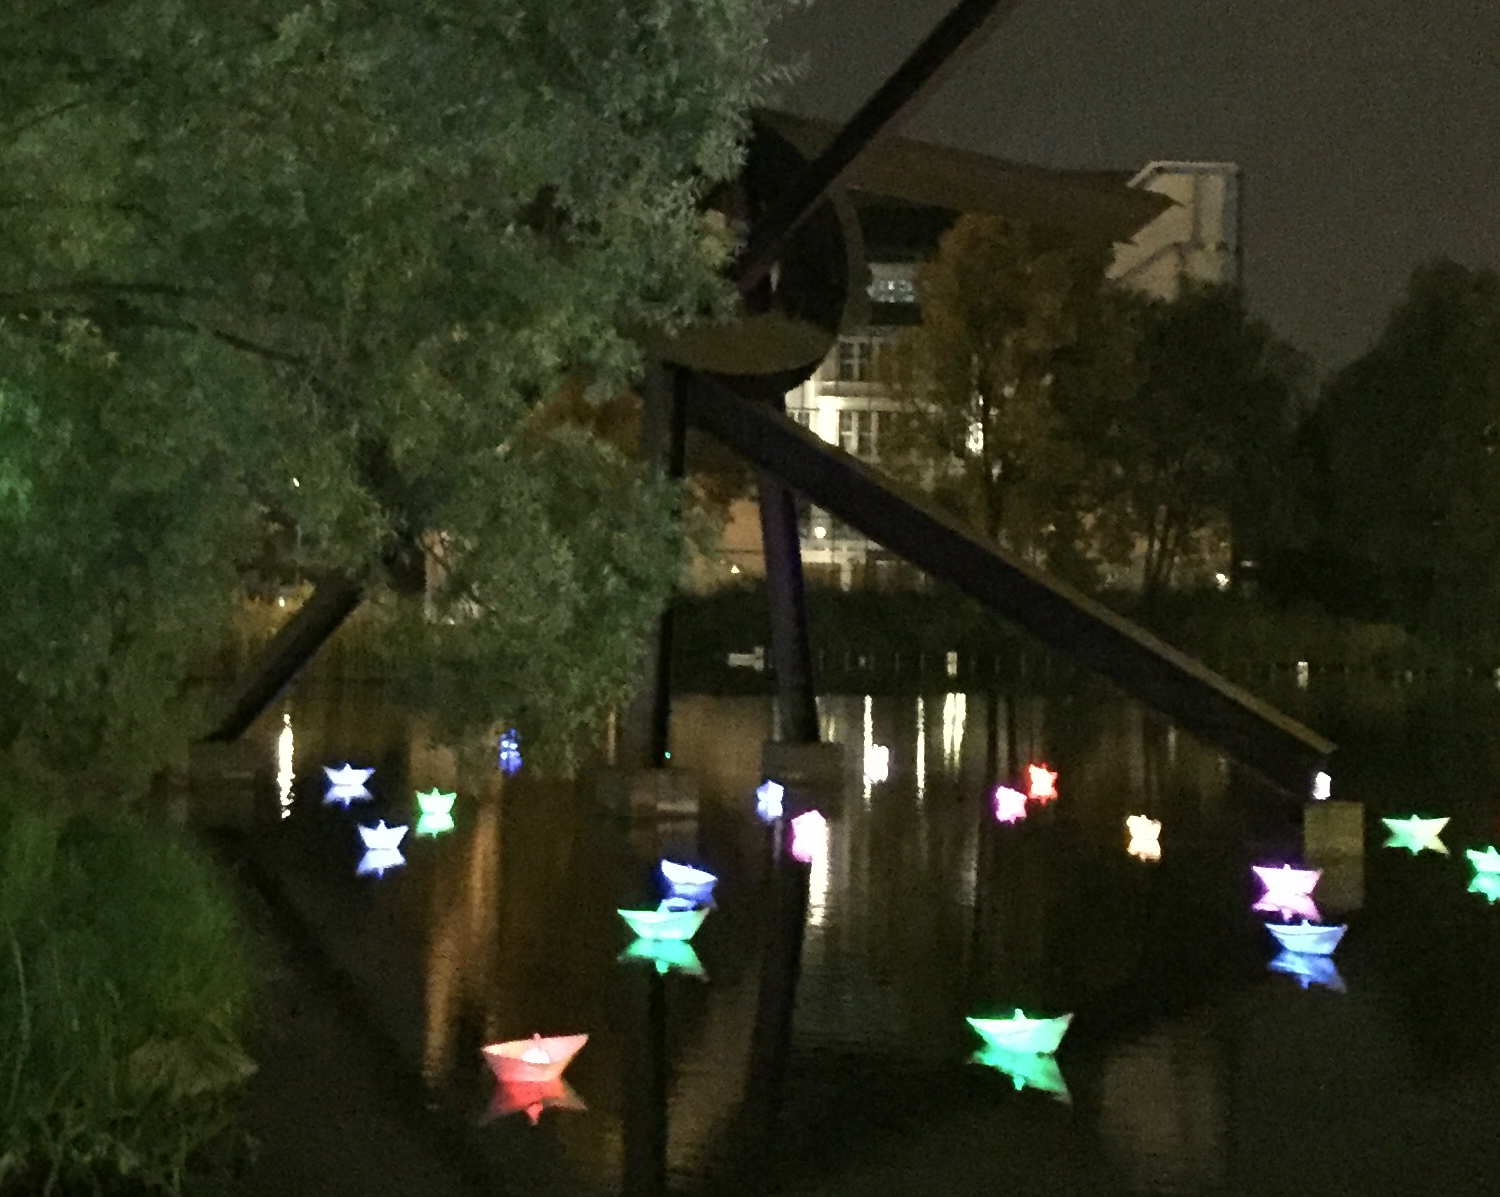 Berlin leuchtet 2016 - LED-Boote auf dem Pianosee